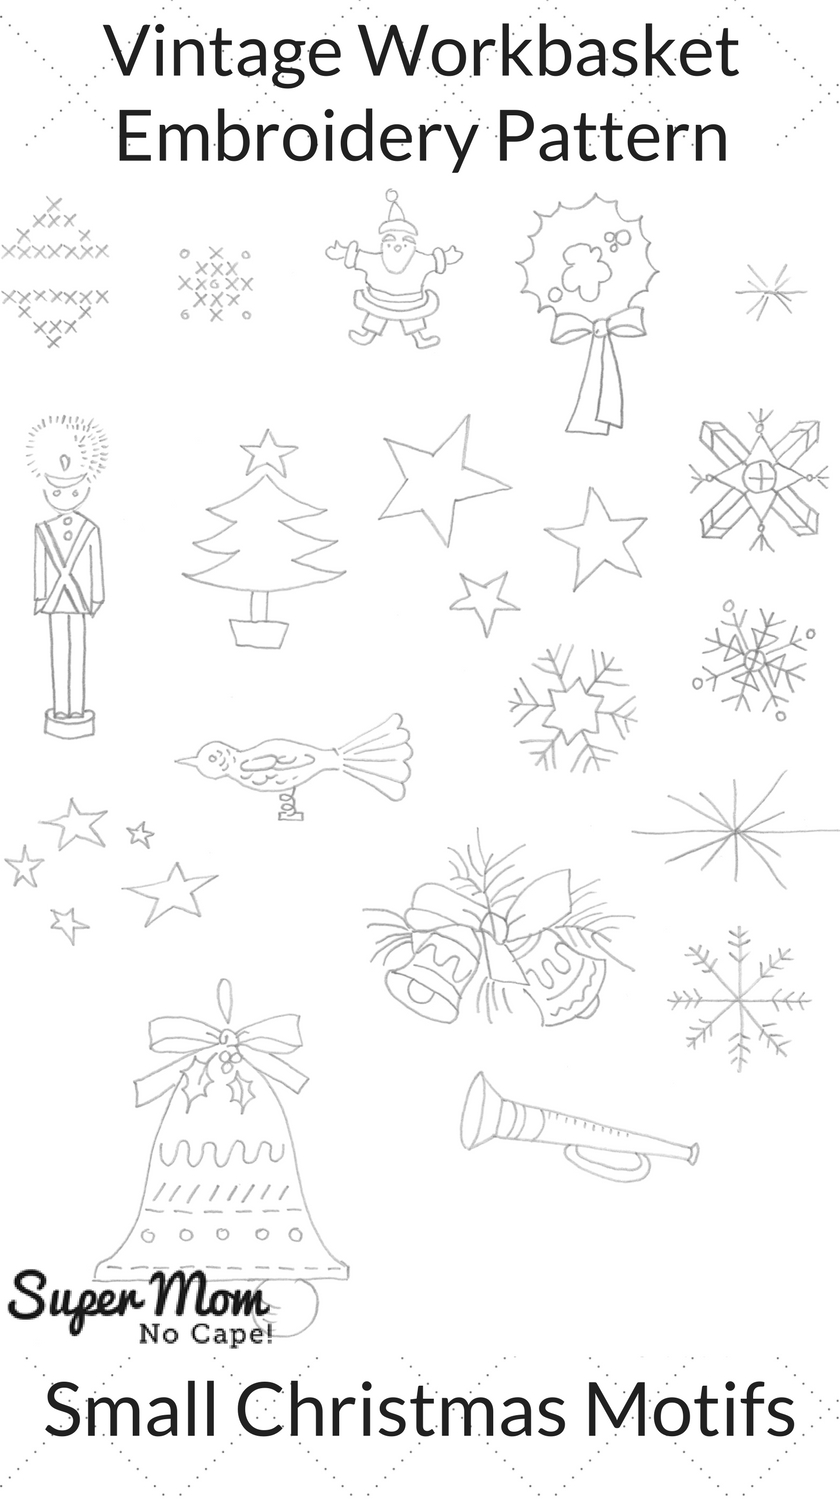 Vintage Workbasket Embroidery Pattern - Small Christmas Motifs